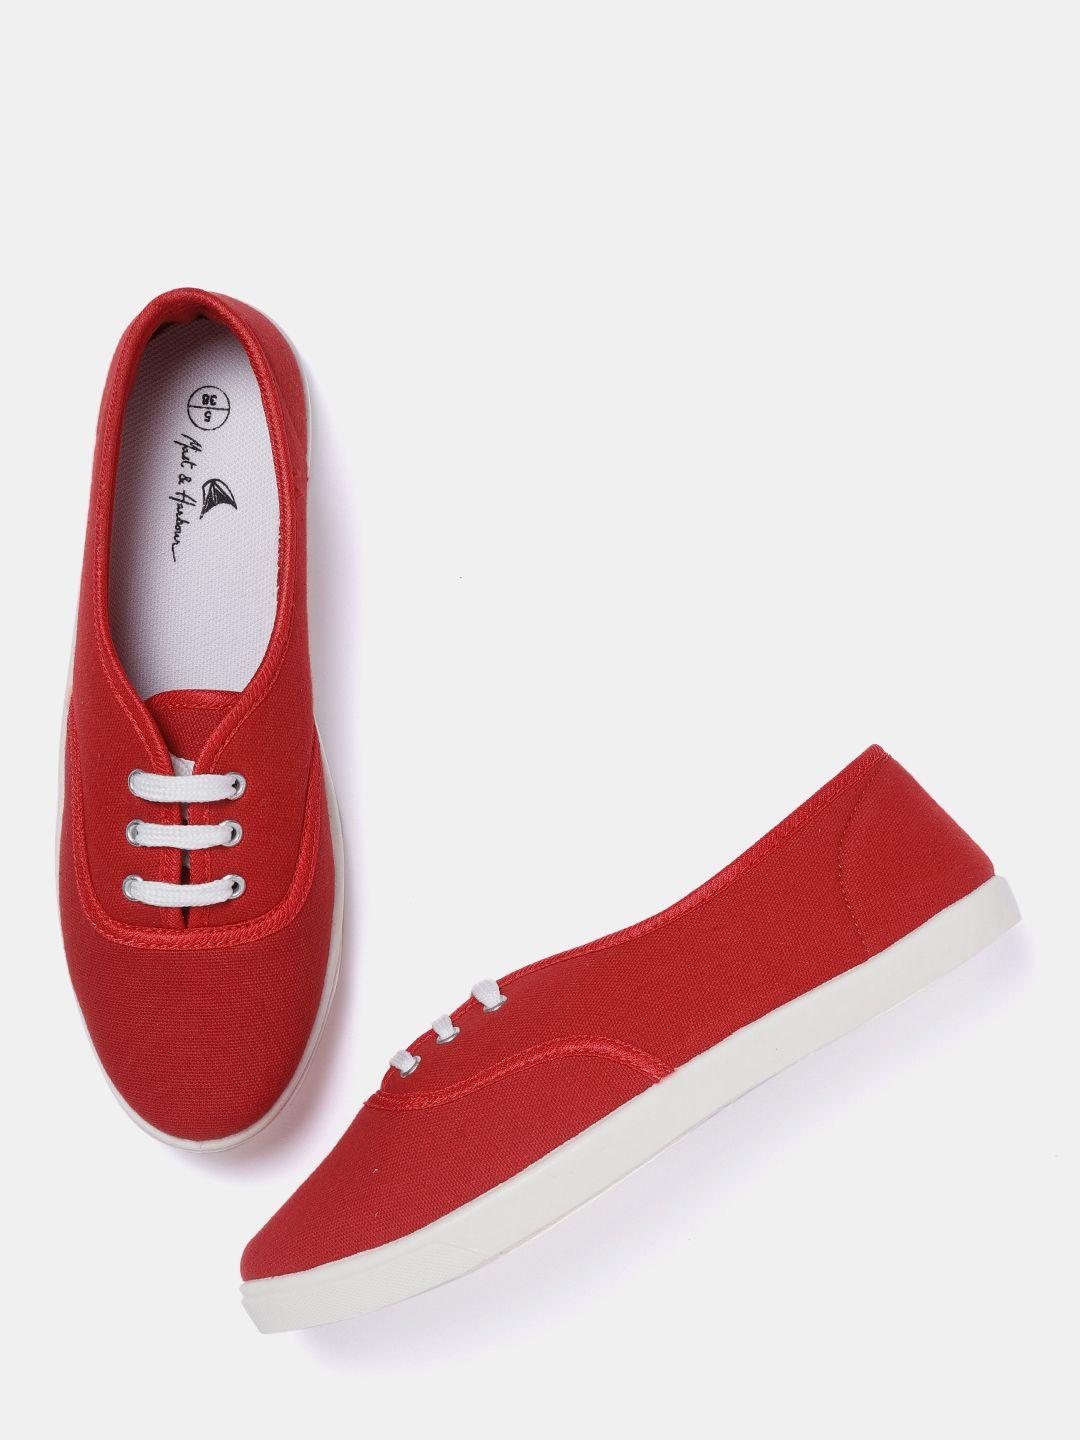 mast & harbour women red sneakers